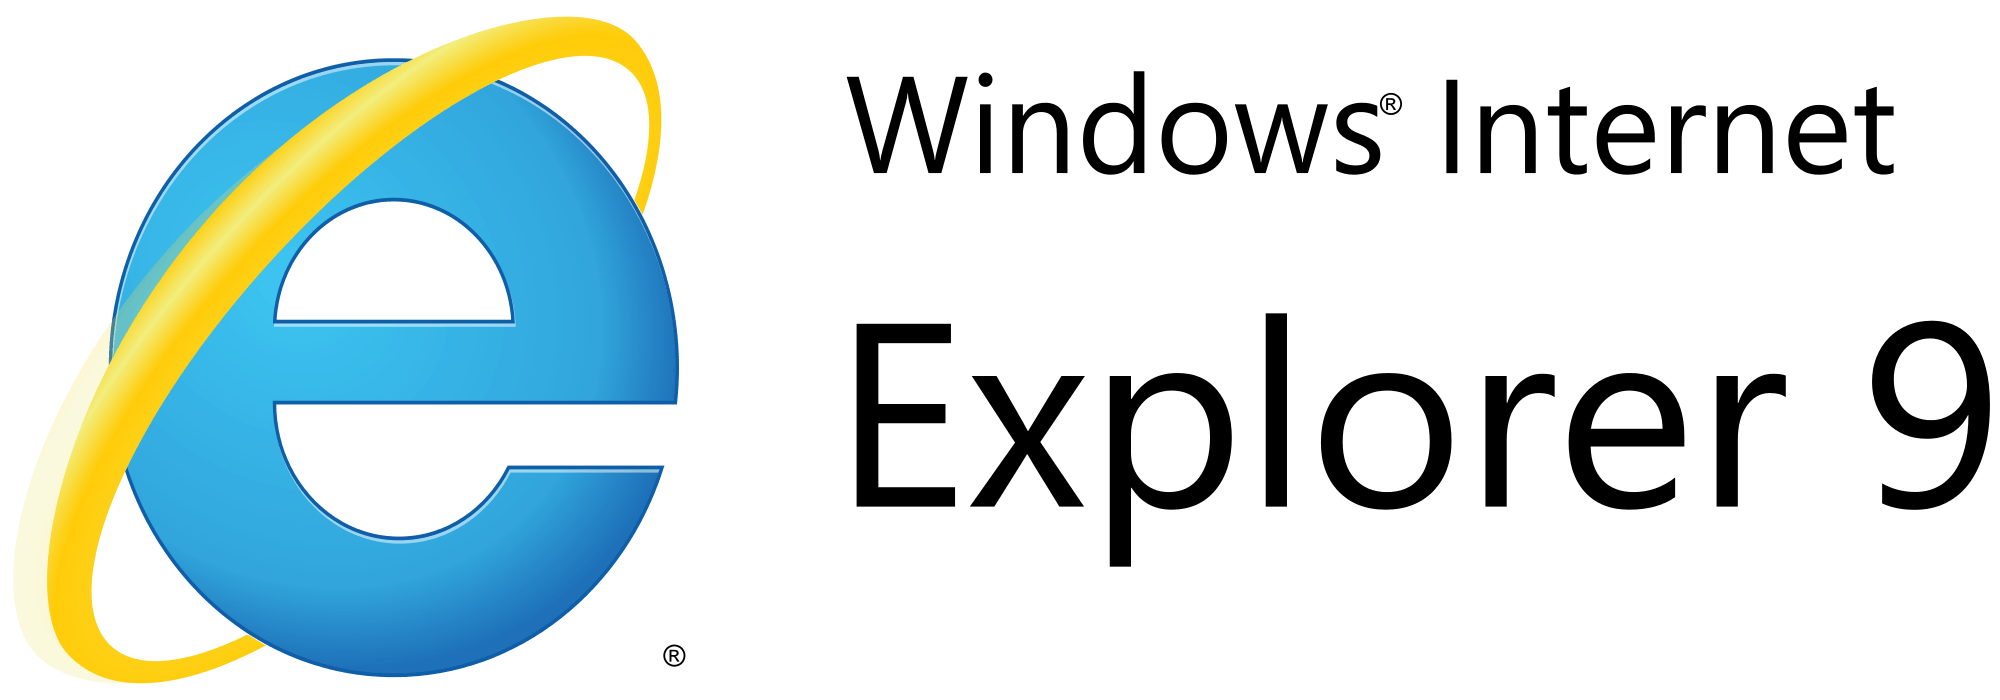 Explorer Logo - File:Windows Internet Explorer 9-Logo.svg - Wikimedia Commons